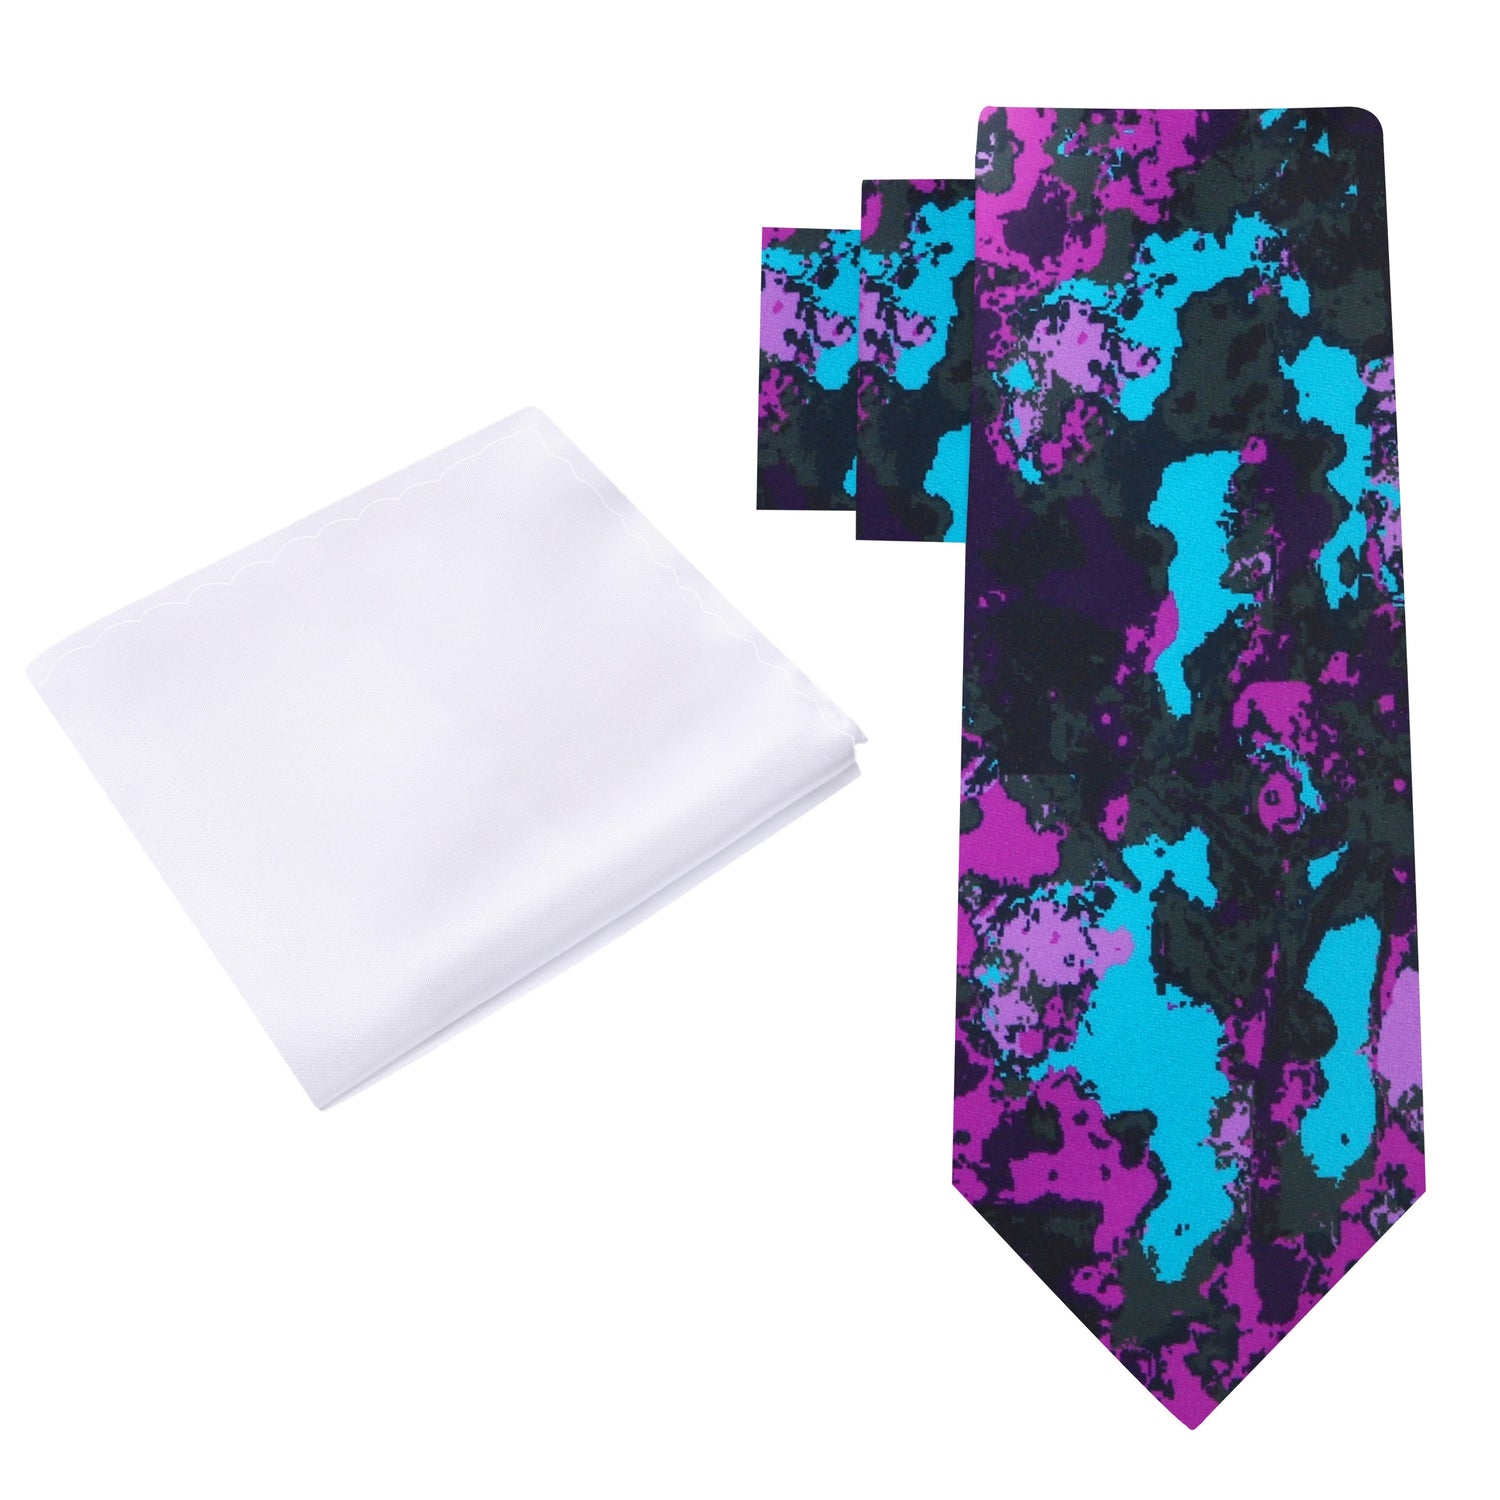 Alt View: Light Blue, Purple Ink Blot Necktie and White Pocket Square